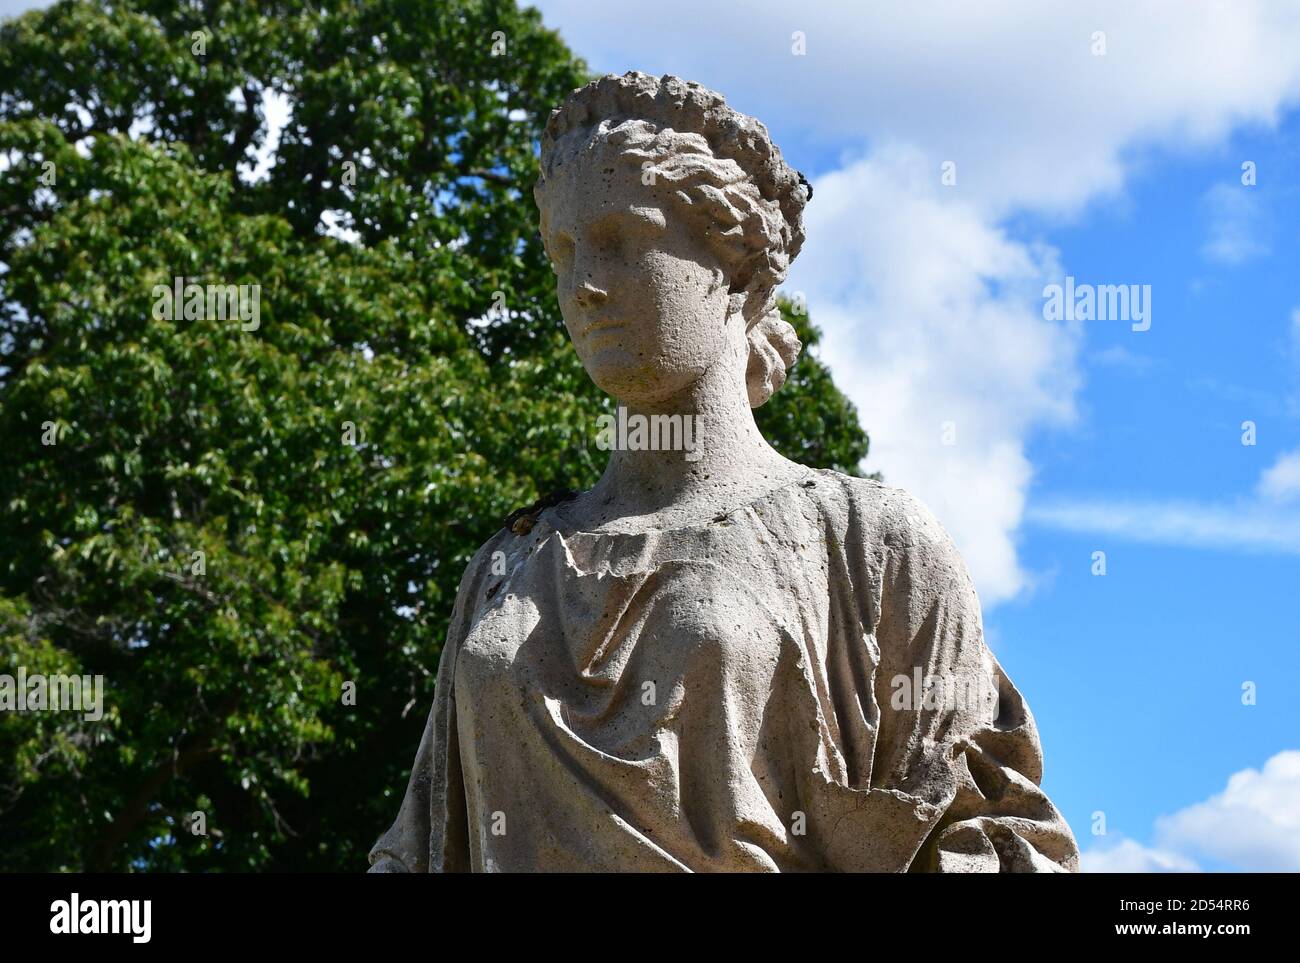 Greek goddess statue in a British garden, England, UK Stock Photo